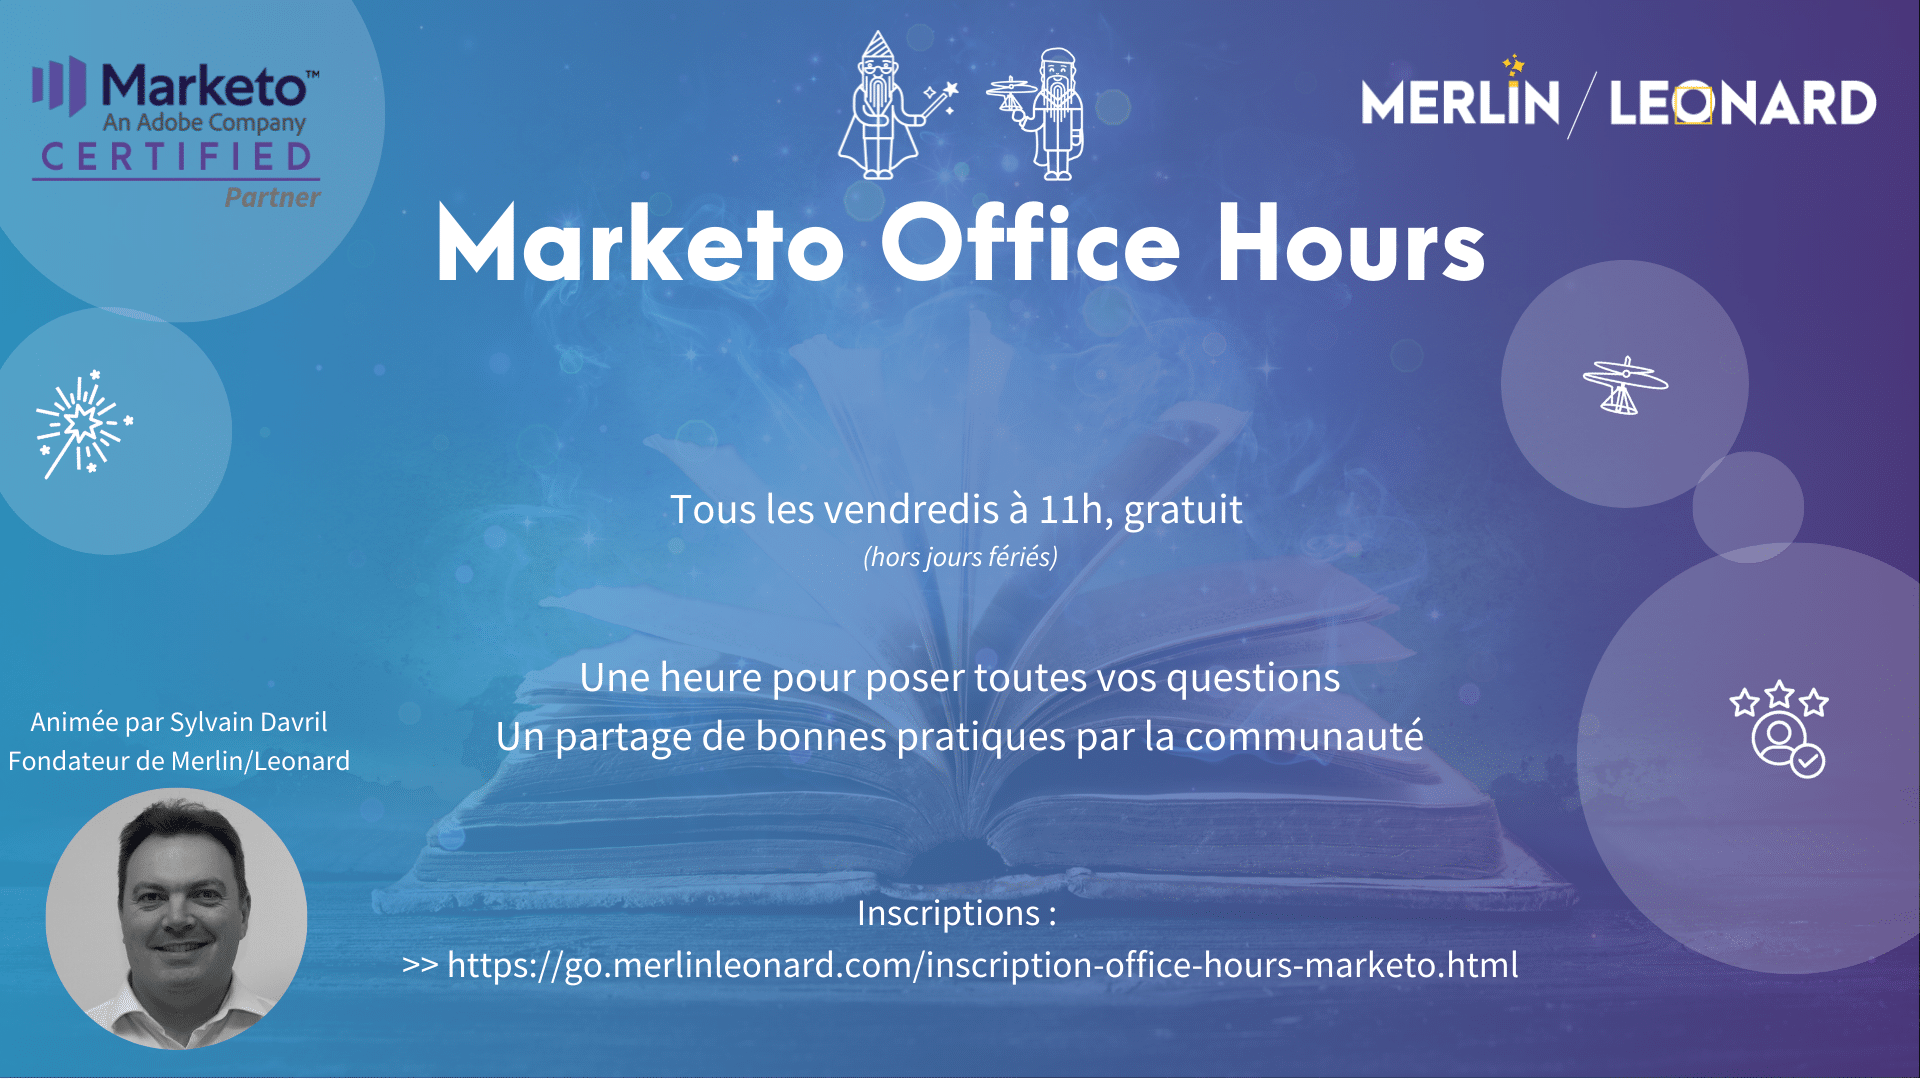 Marketo Office Hours